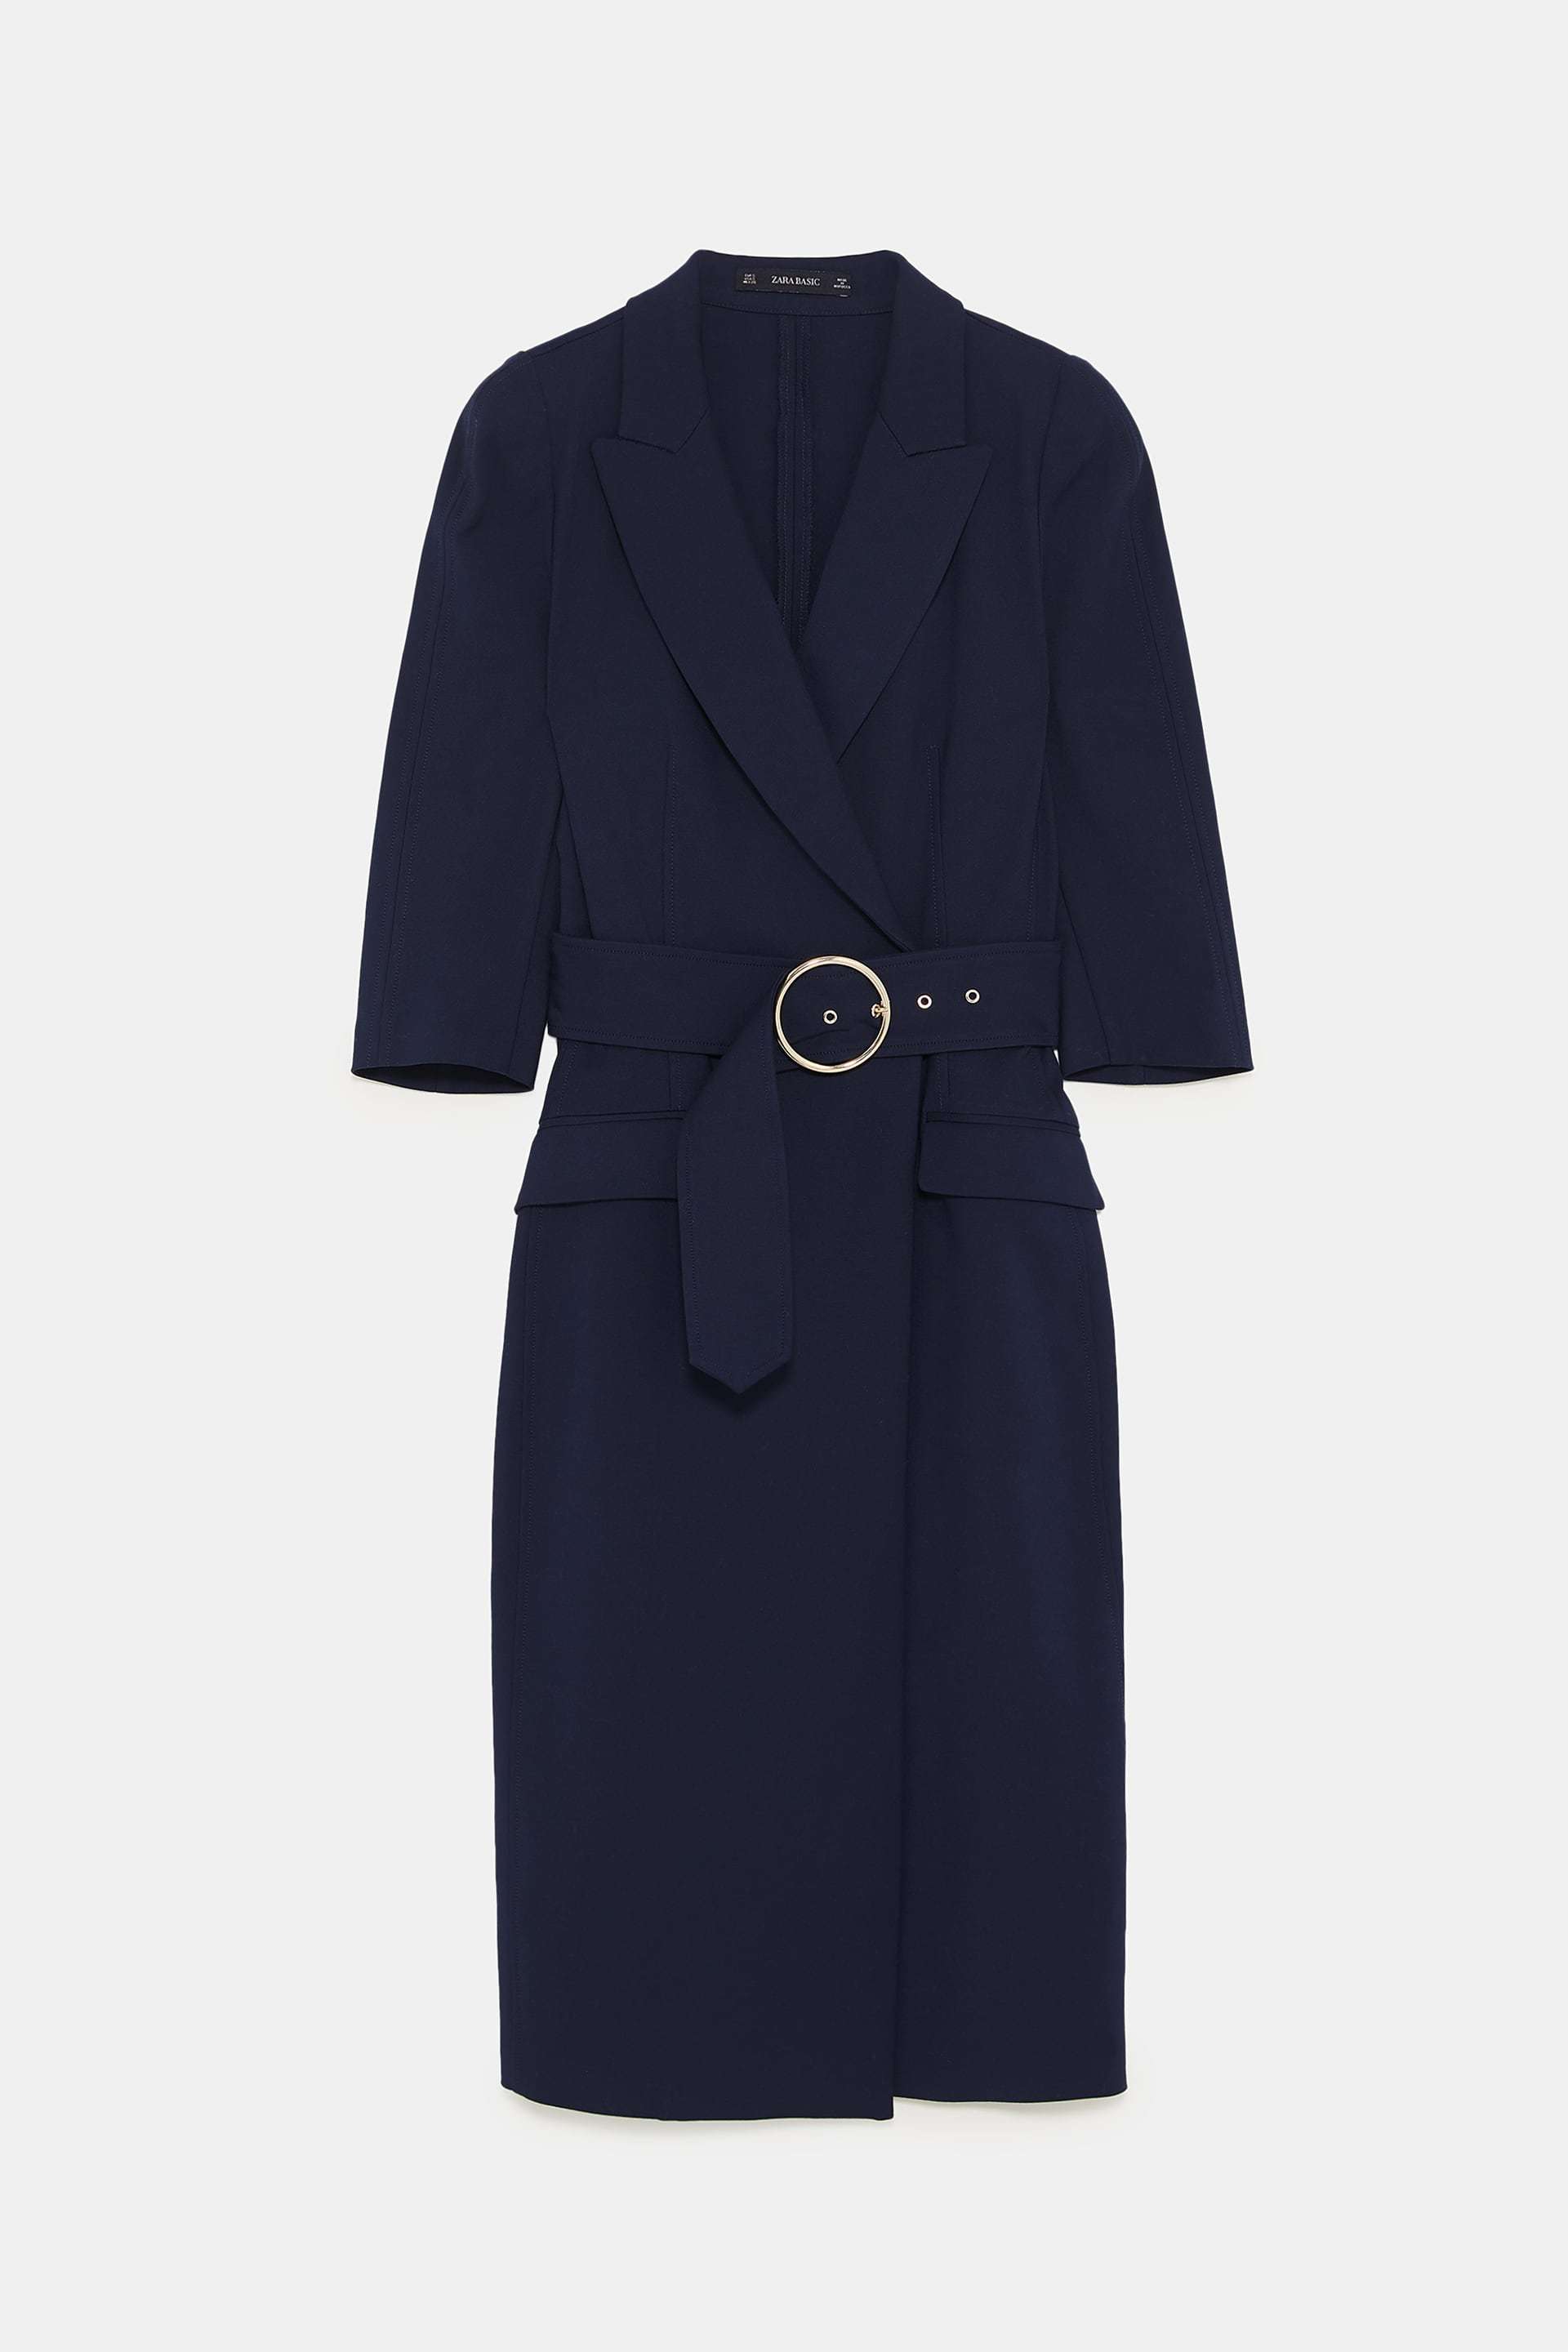 Vestido blazer de Zara (59,95 euros).